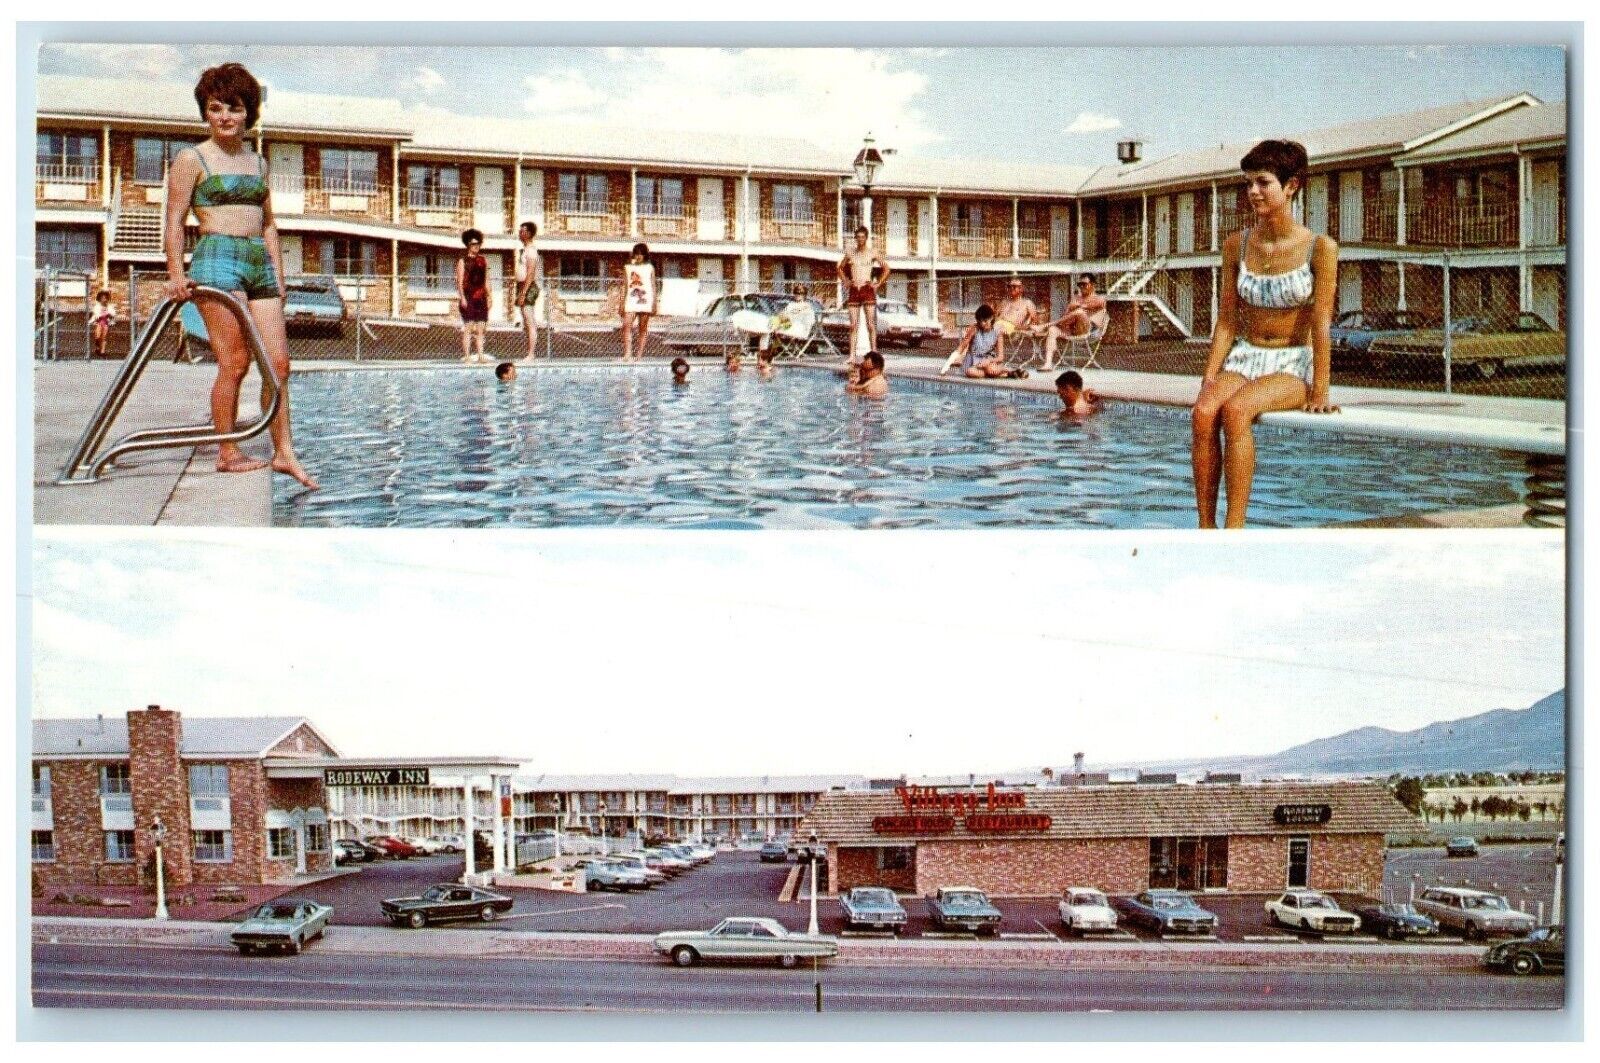 c1960 Rodeway Inn Pikes Peak Avenue Colorado Springs Colorado Vintage Postcard